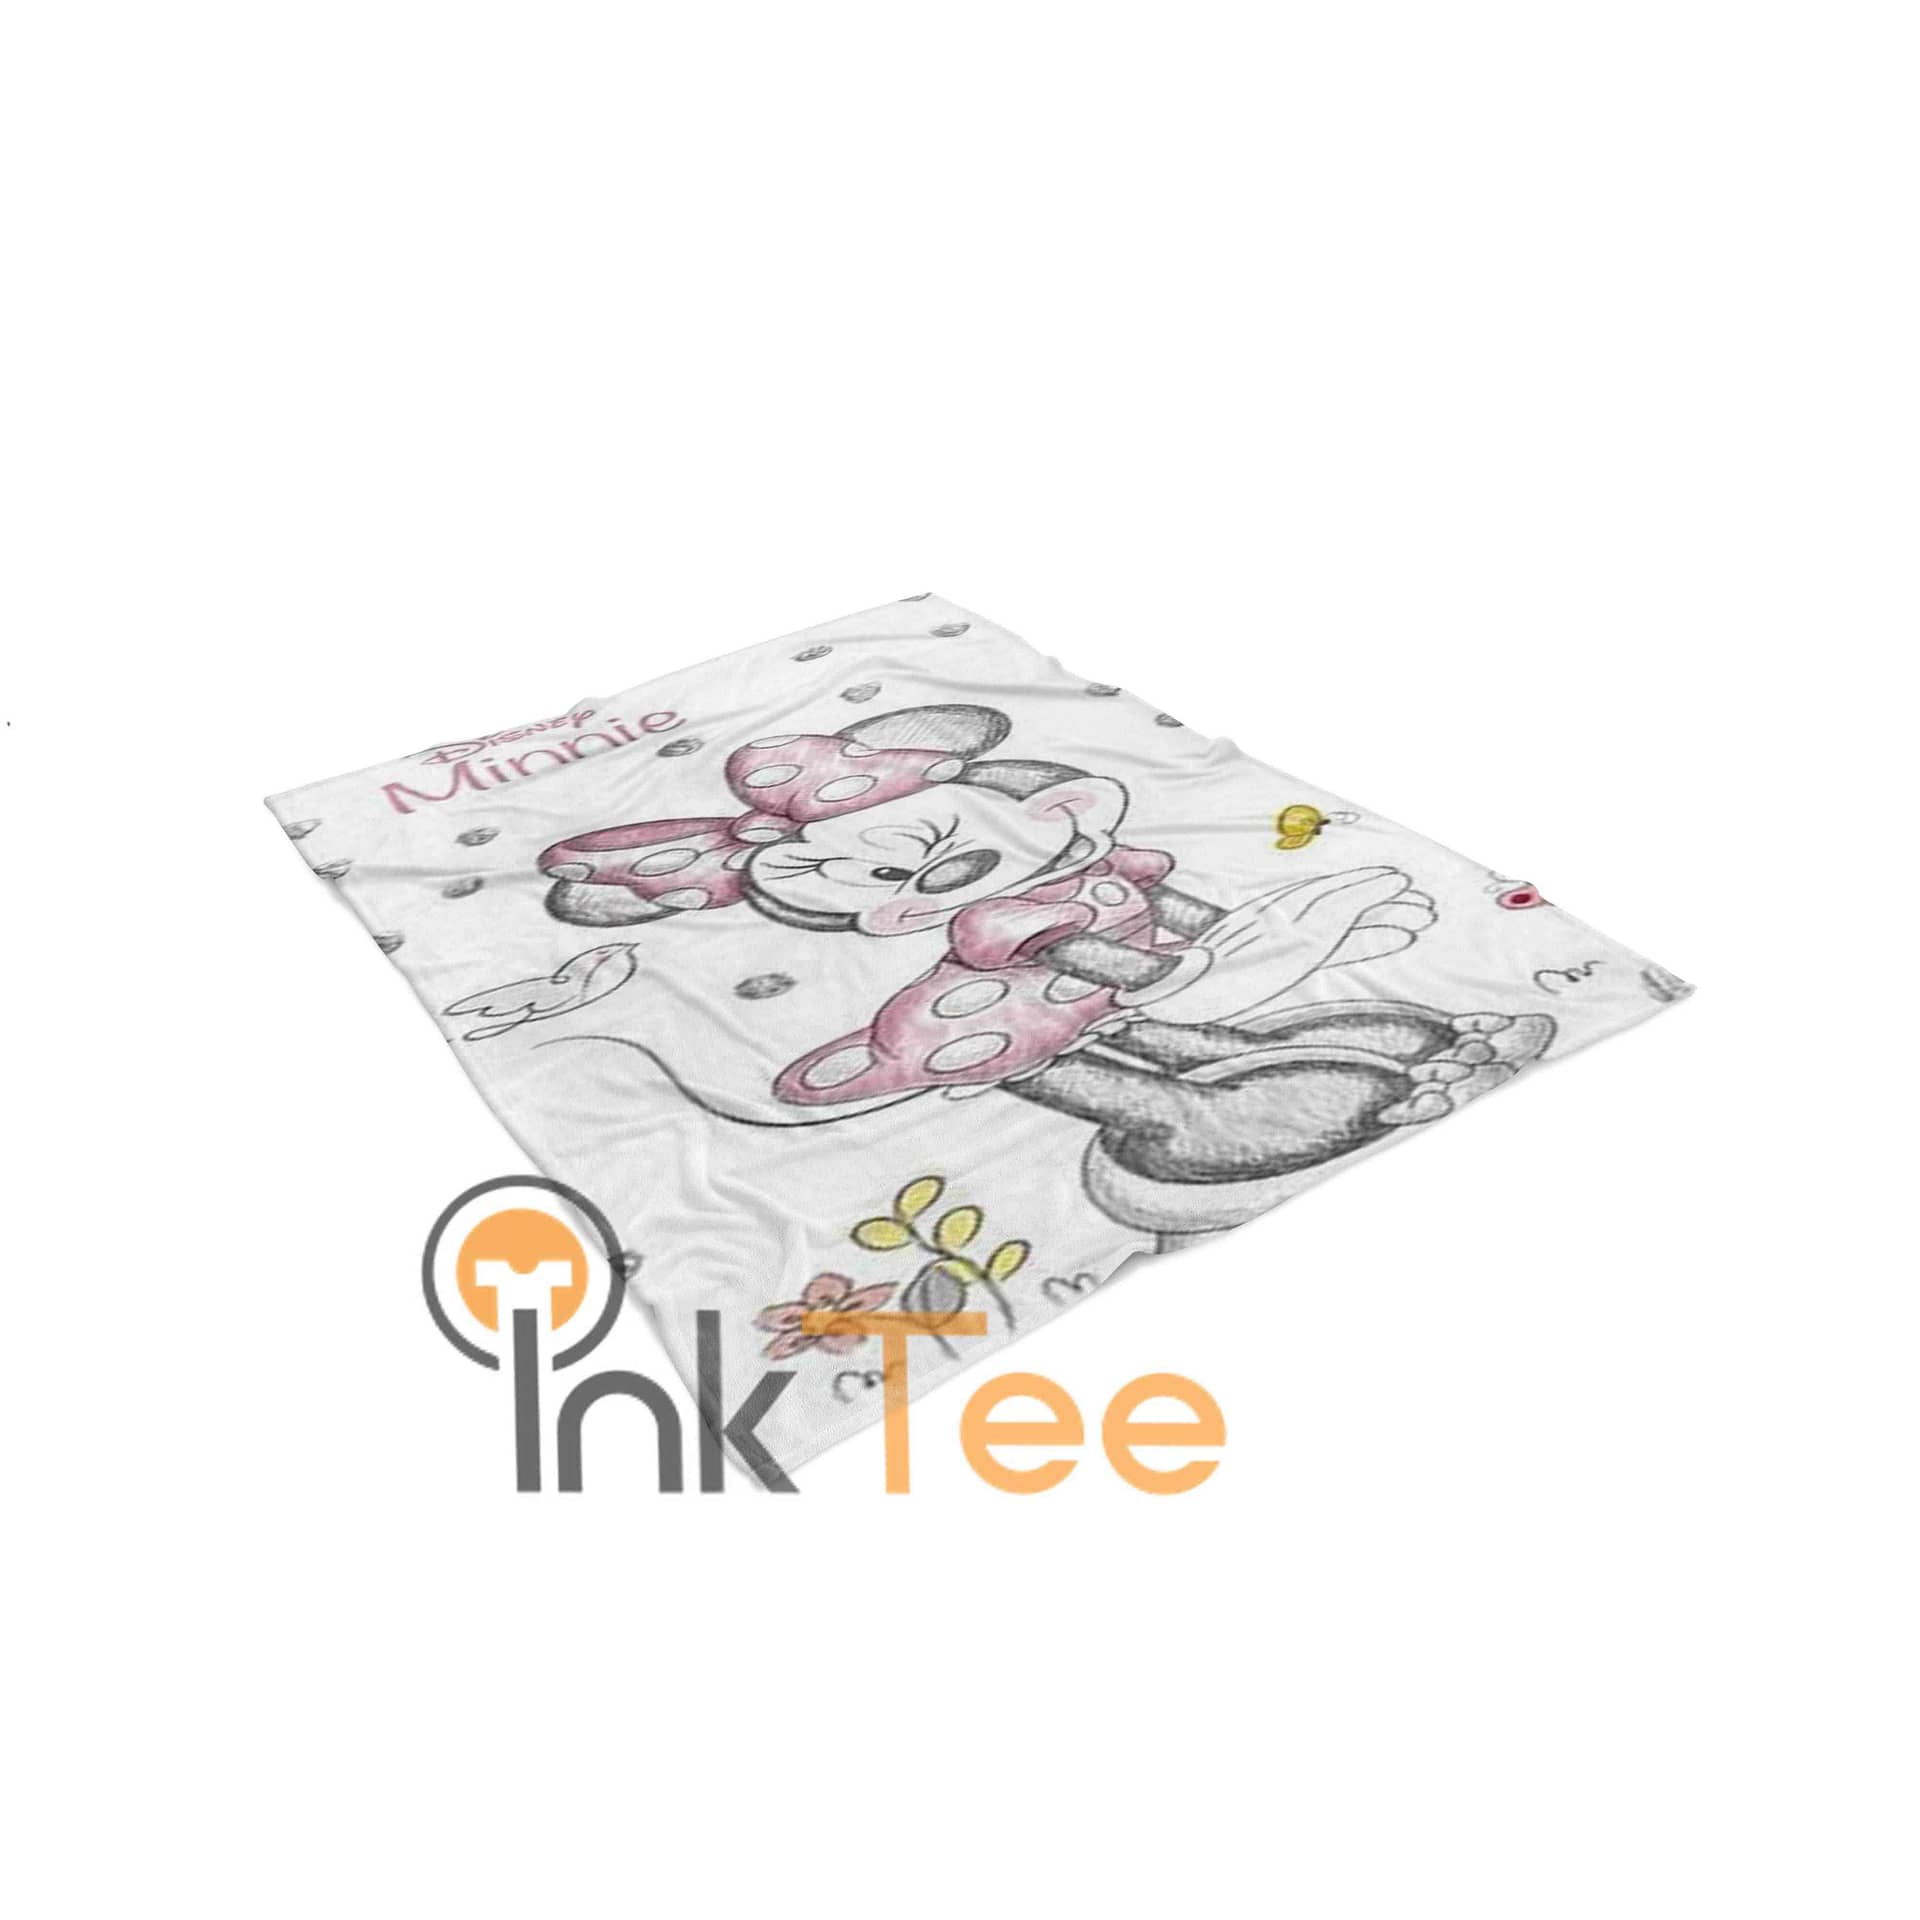 Inktee Store - Disney Minnie Mickey Limited Edition Area Amazon Best Seller 4112 Fleece Blanket Image